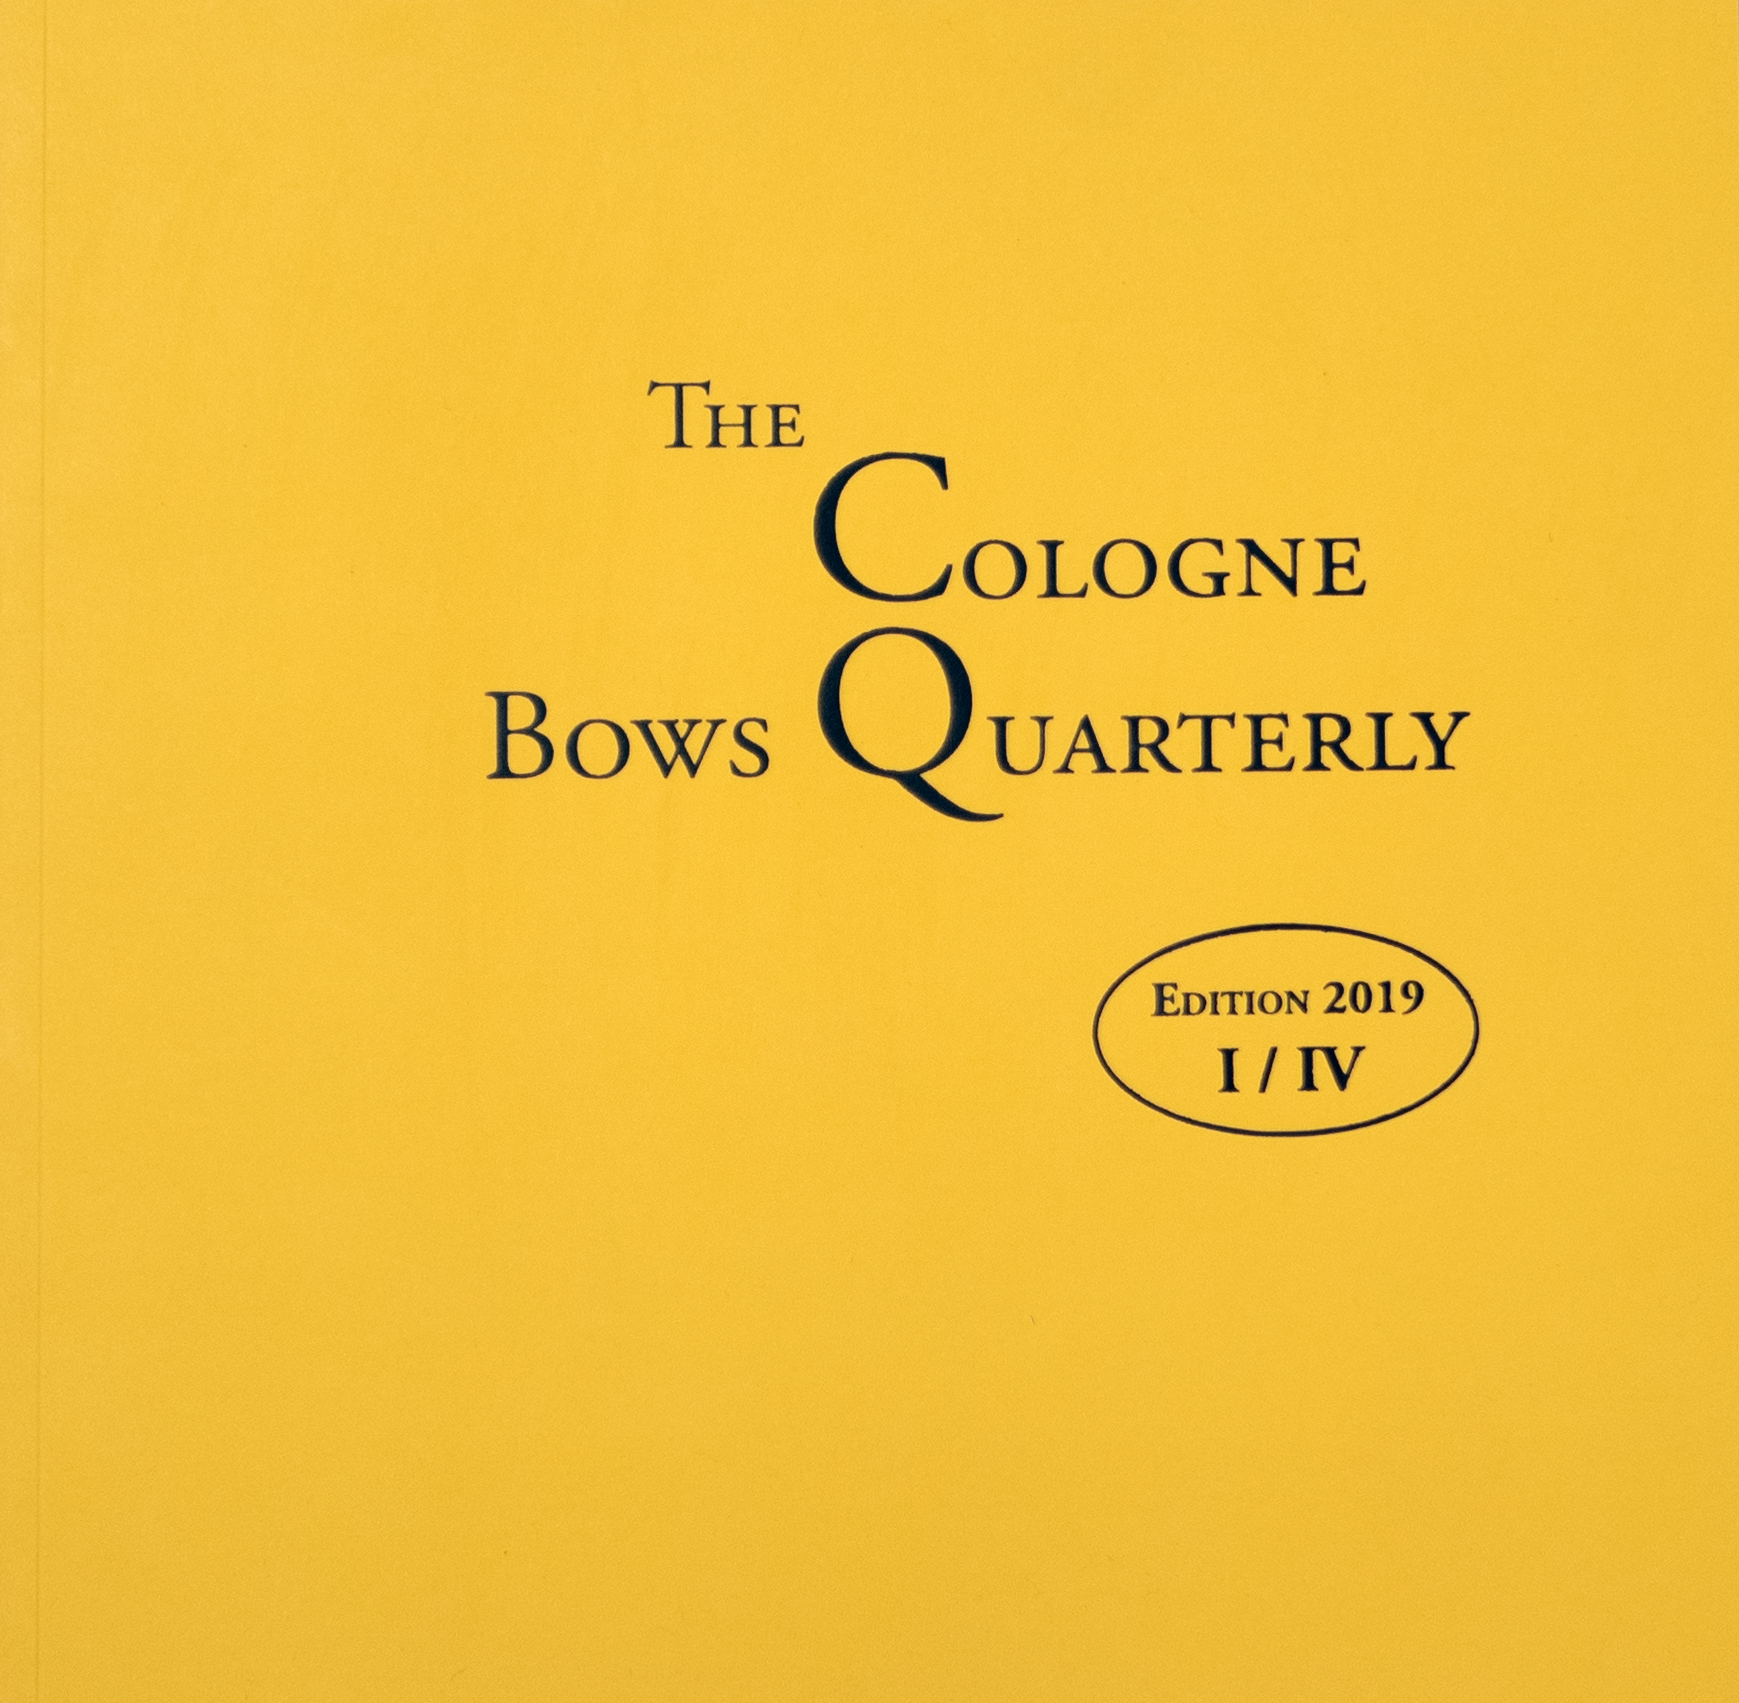 The Cologne Bows Quarterly - Edition 2019 I / IV